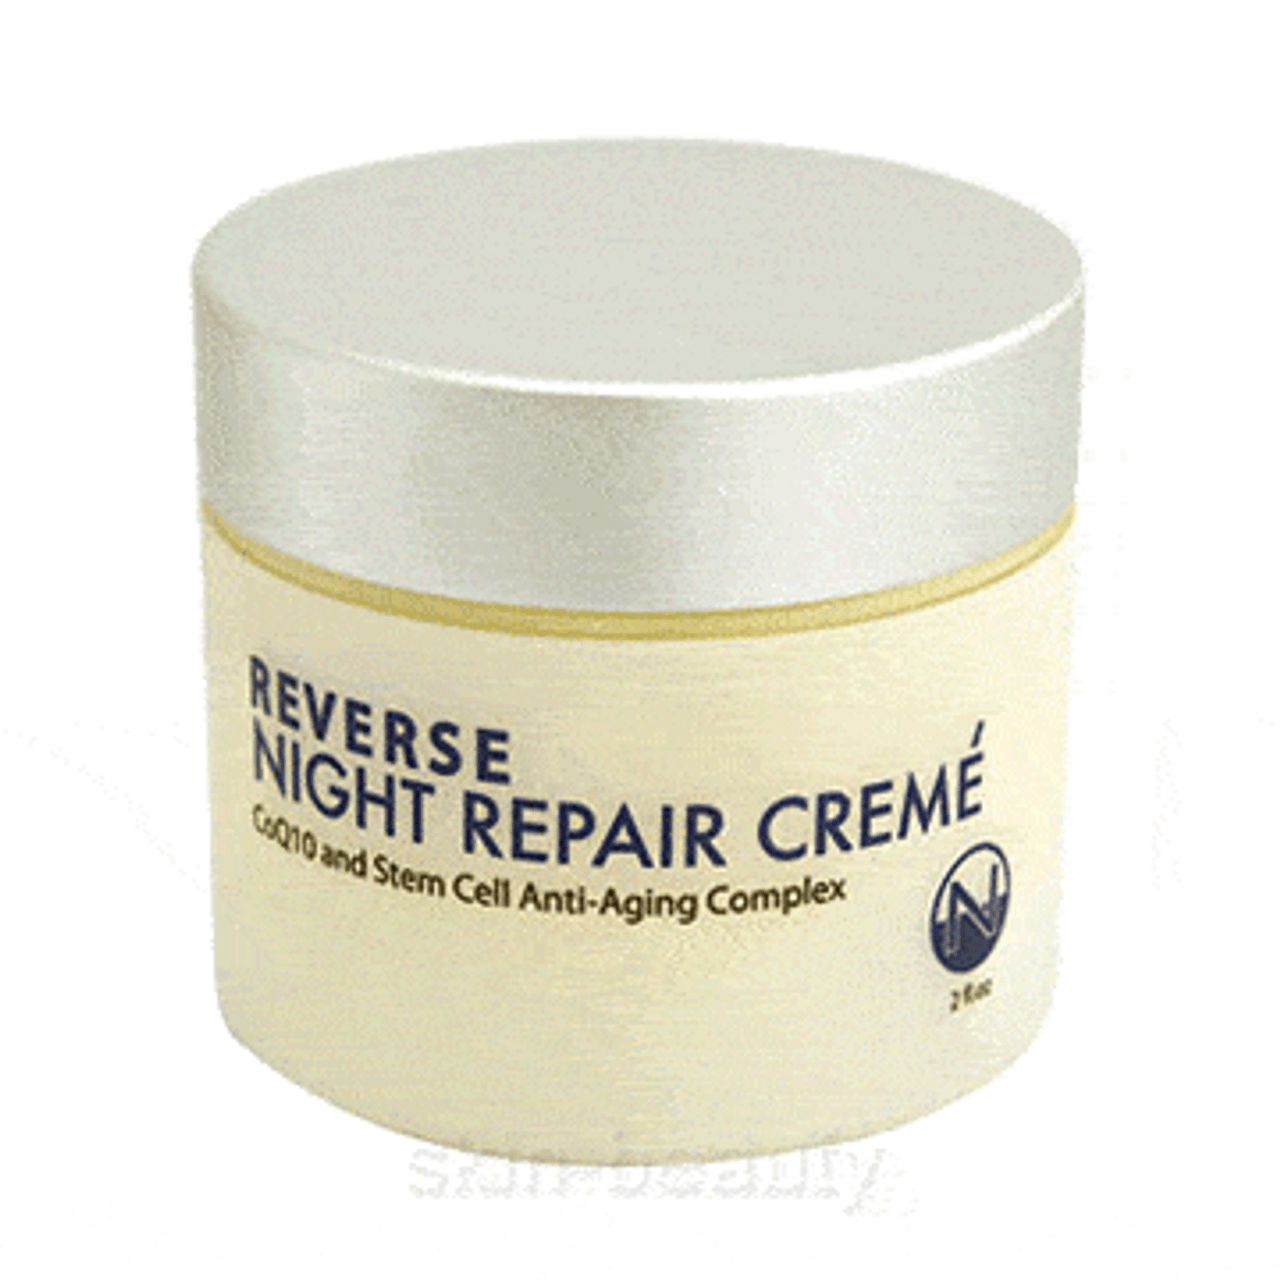 Skin-Beauty Reverse Night Repair Creme - 2 oz